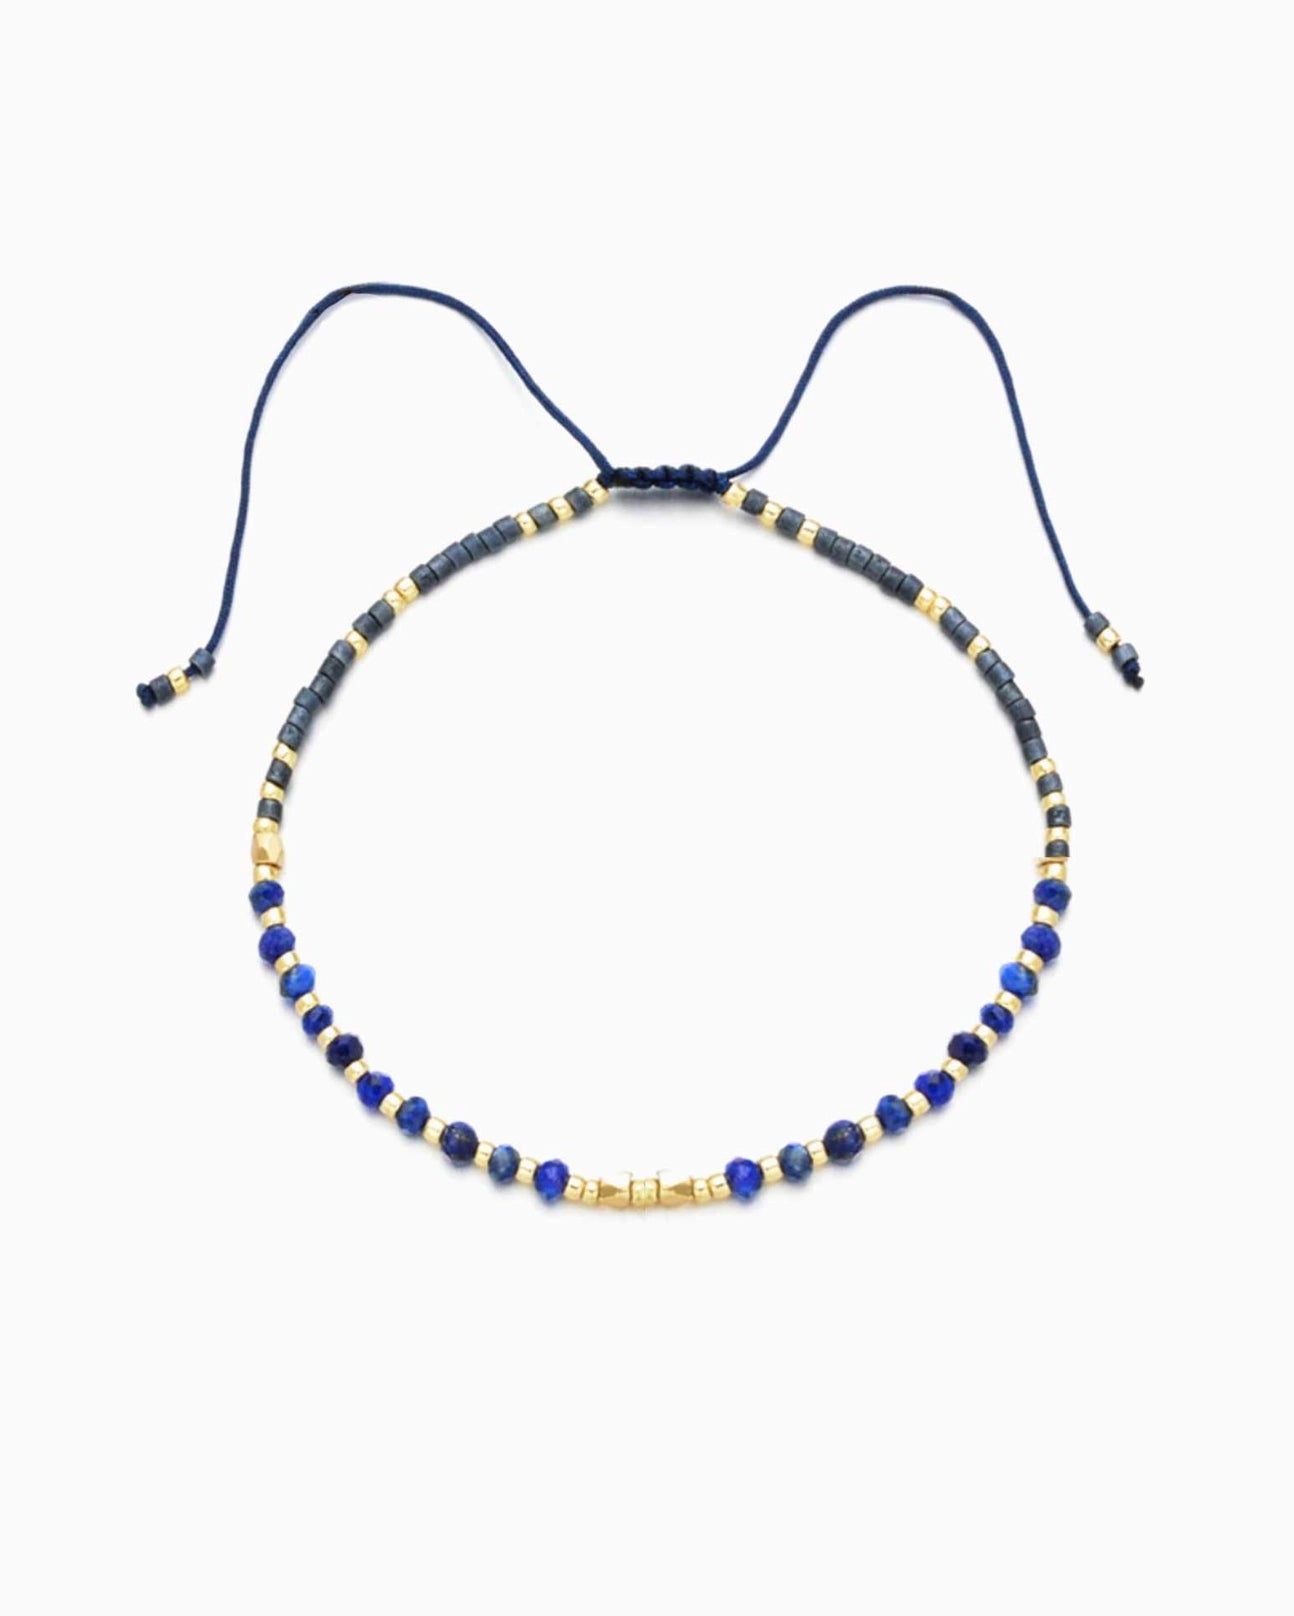 Lapis Lazuli Healing Gemstone Stacking Bracelet - Moon Room Shop and Wellness